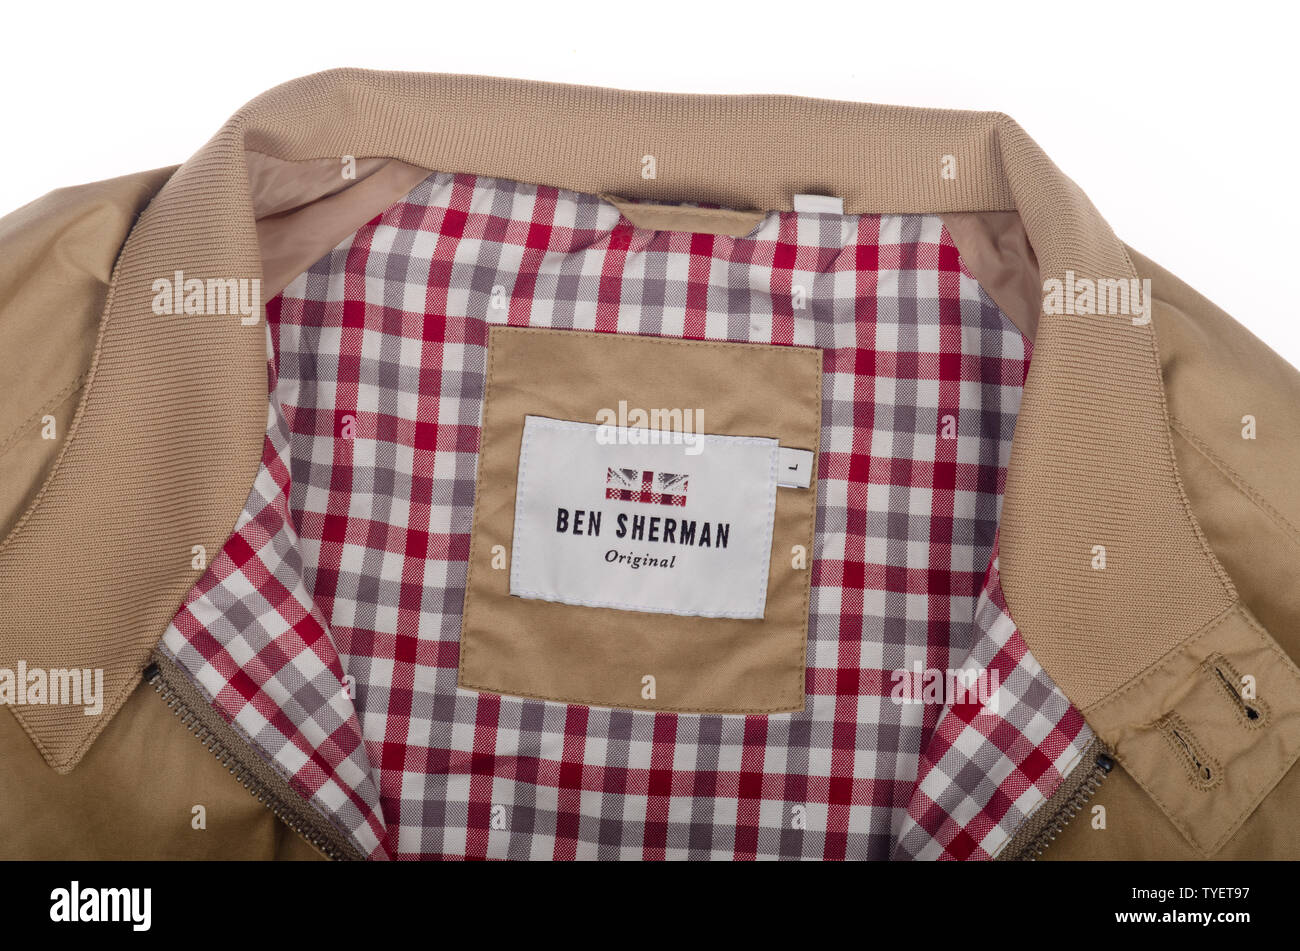 Ben Sherman Harrington Jacket with label Stock Photo - Alamy